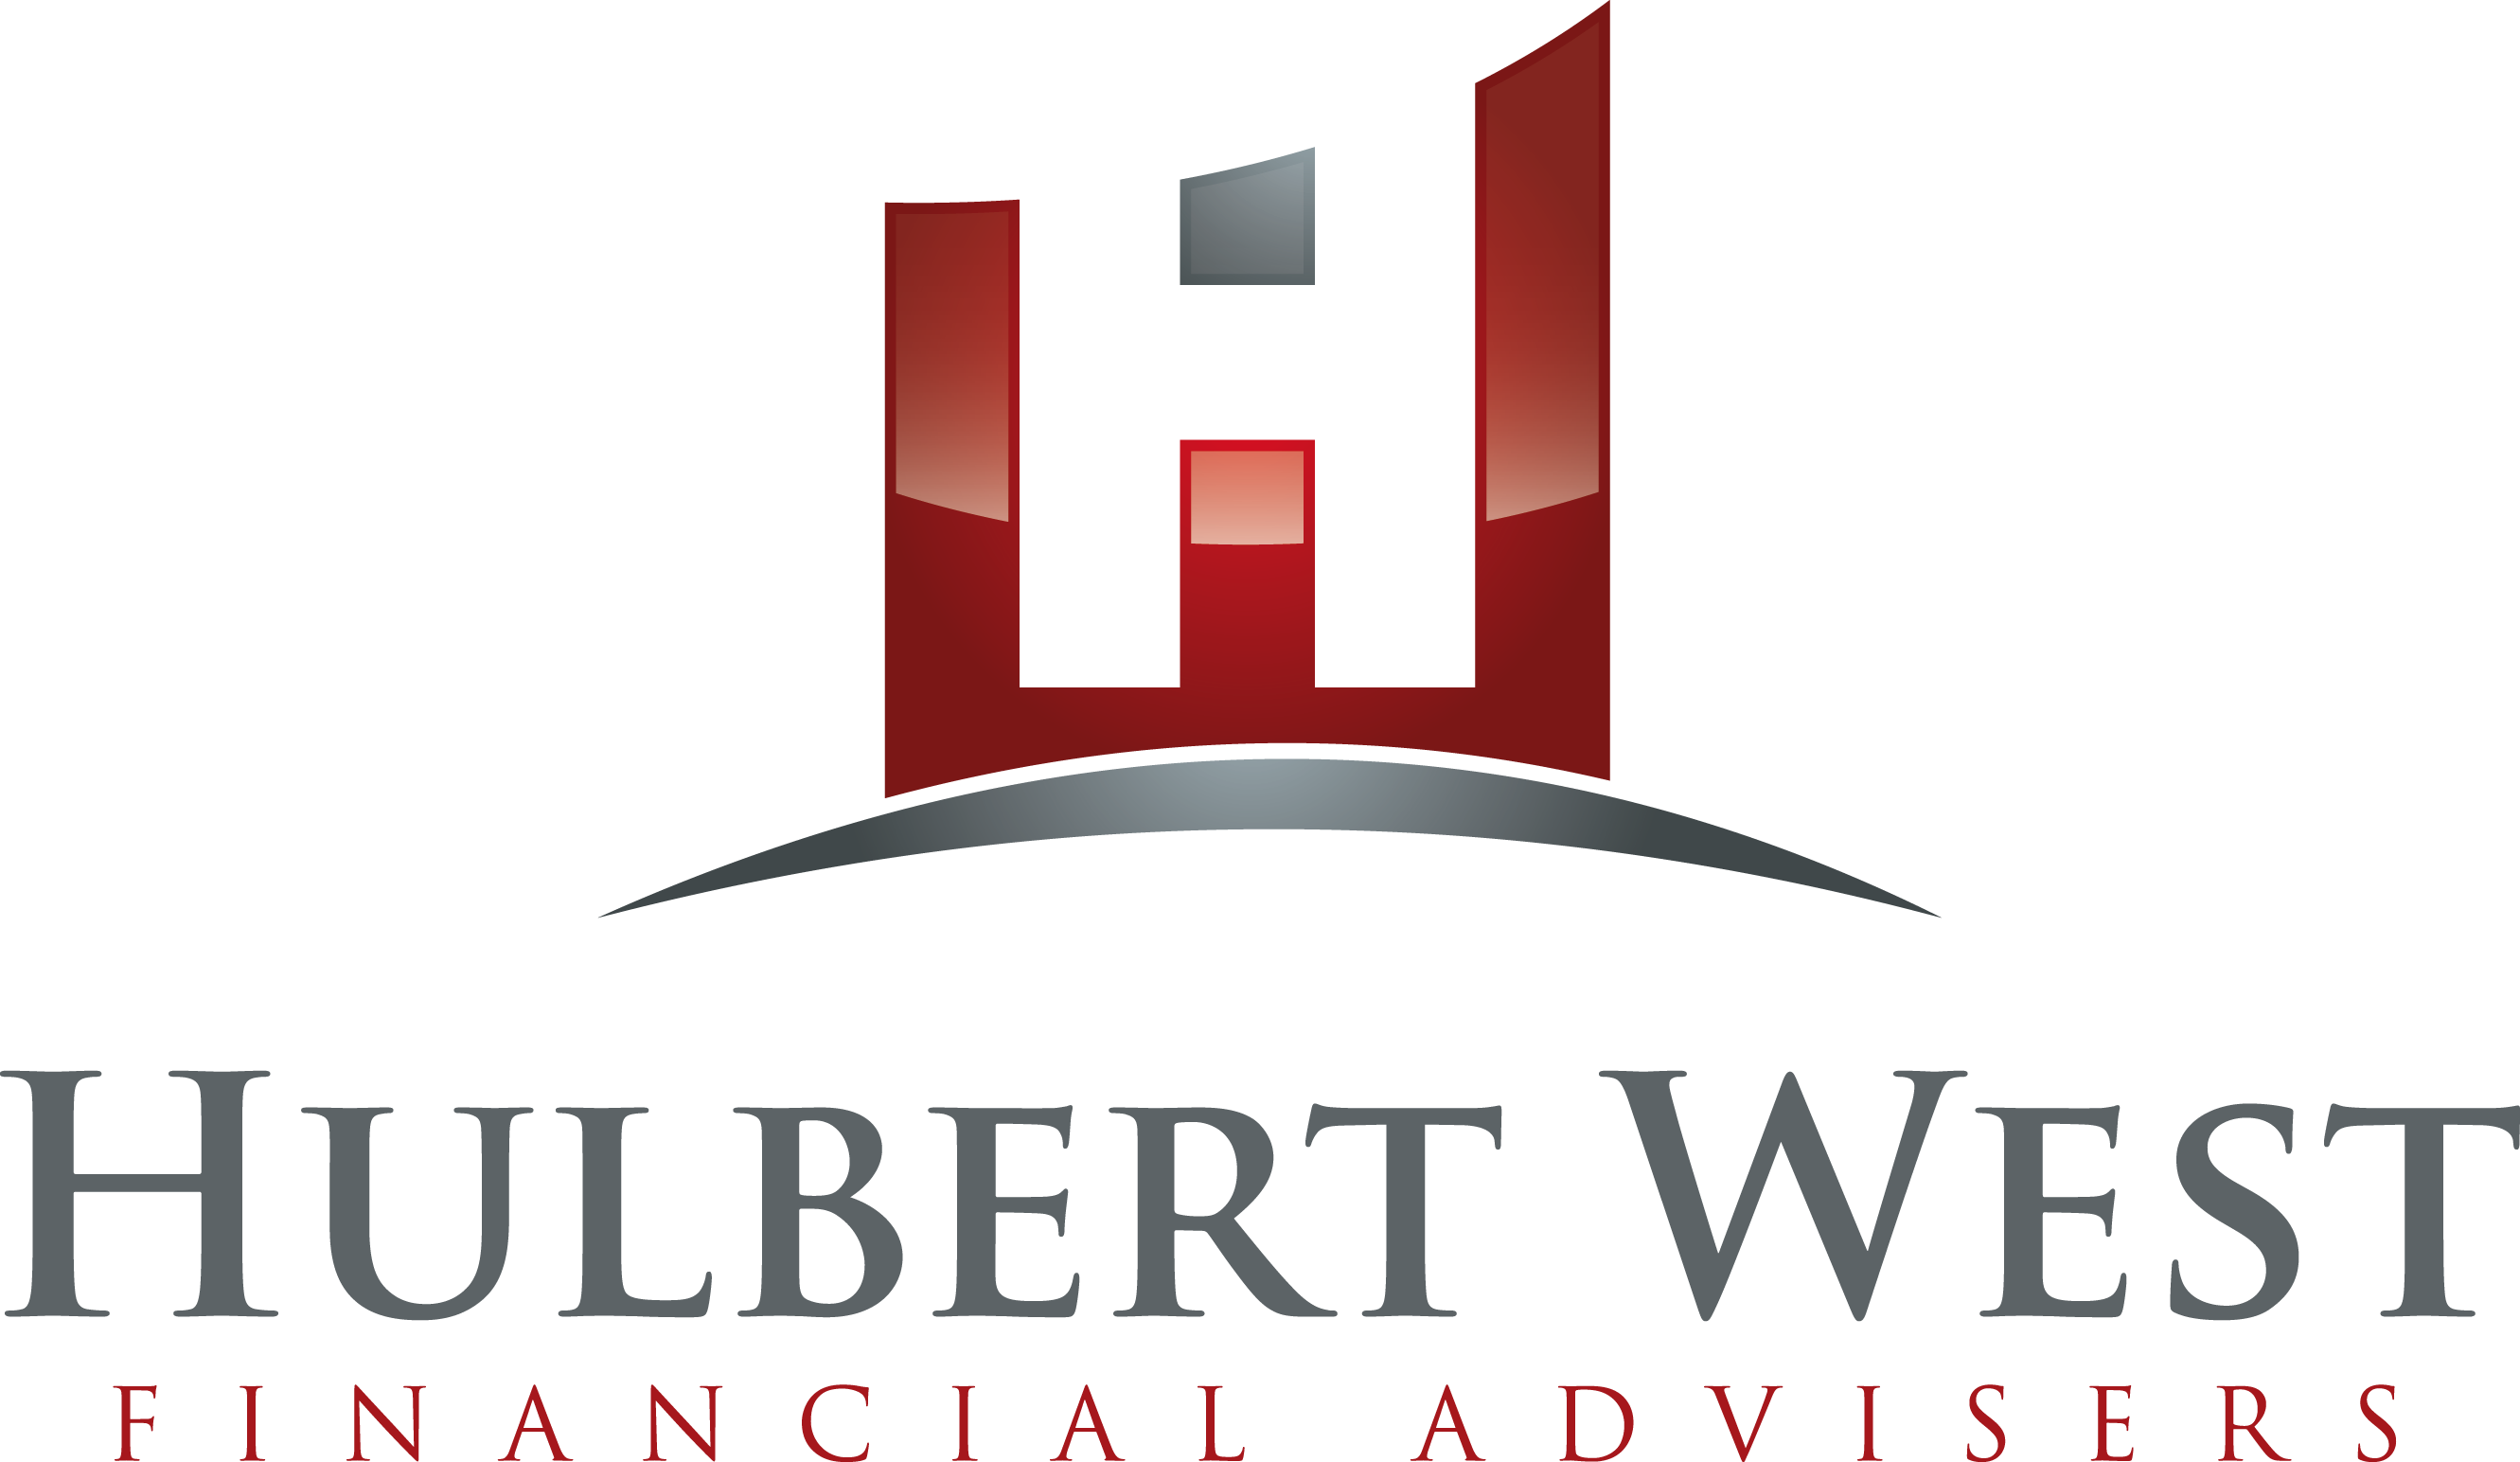 hulbert west logo